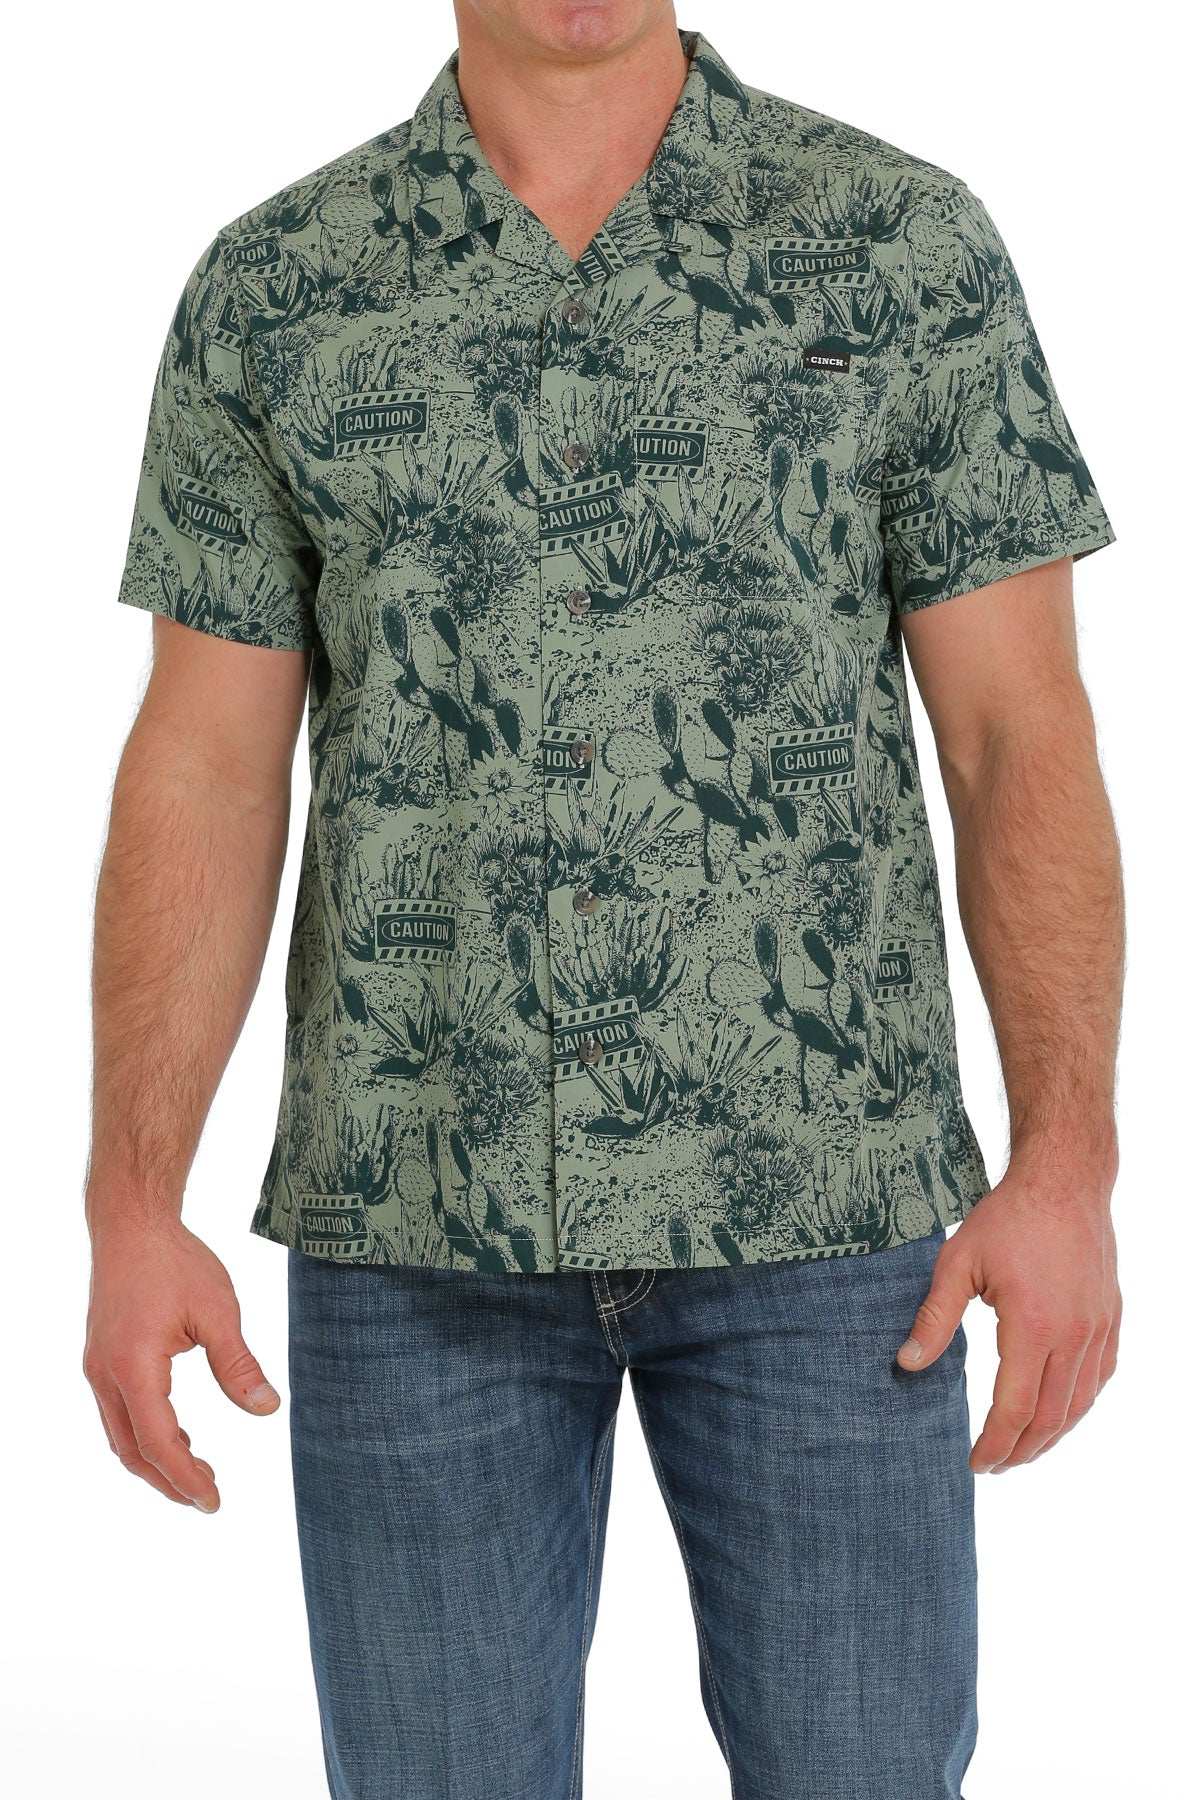 Men's Cinch Button Down Shirt #MTW1401026 | High Country Western Wear